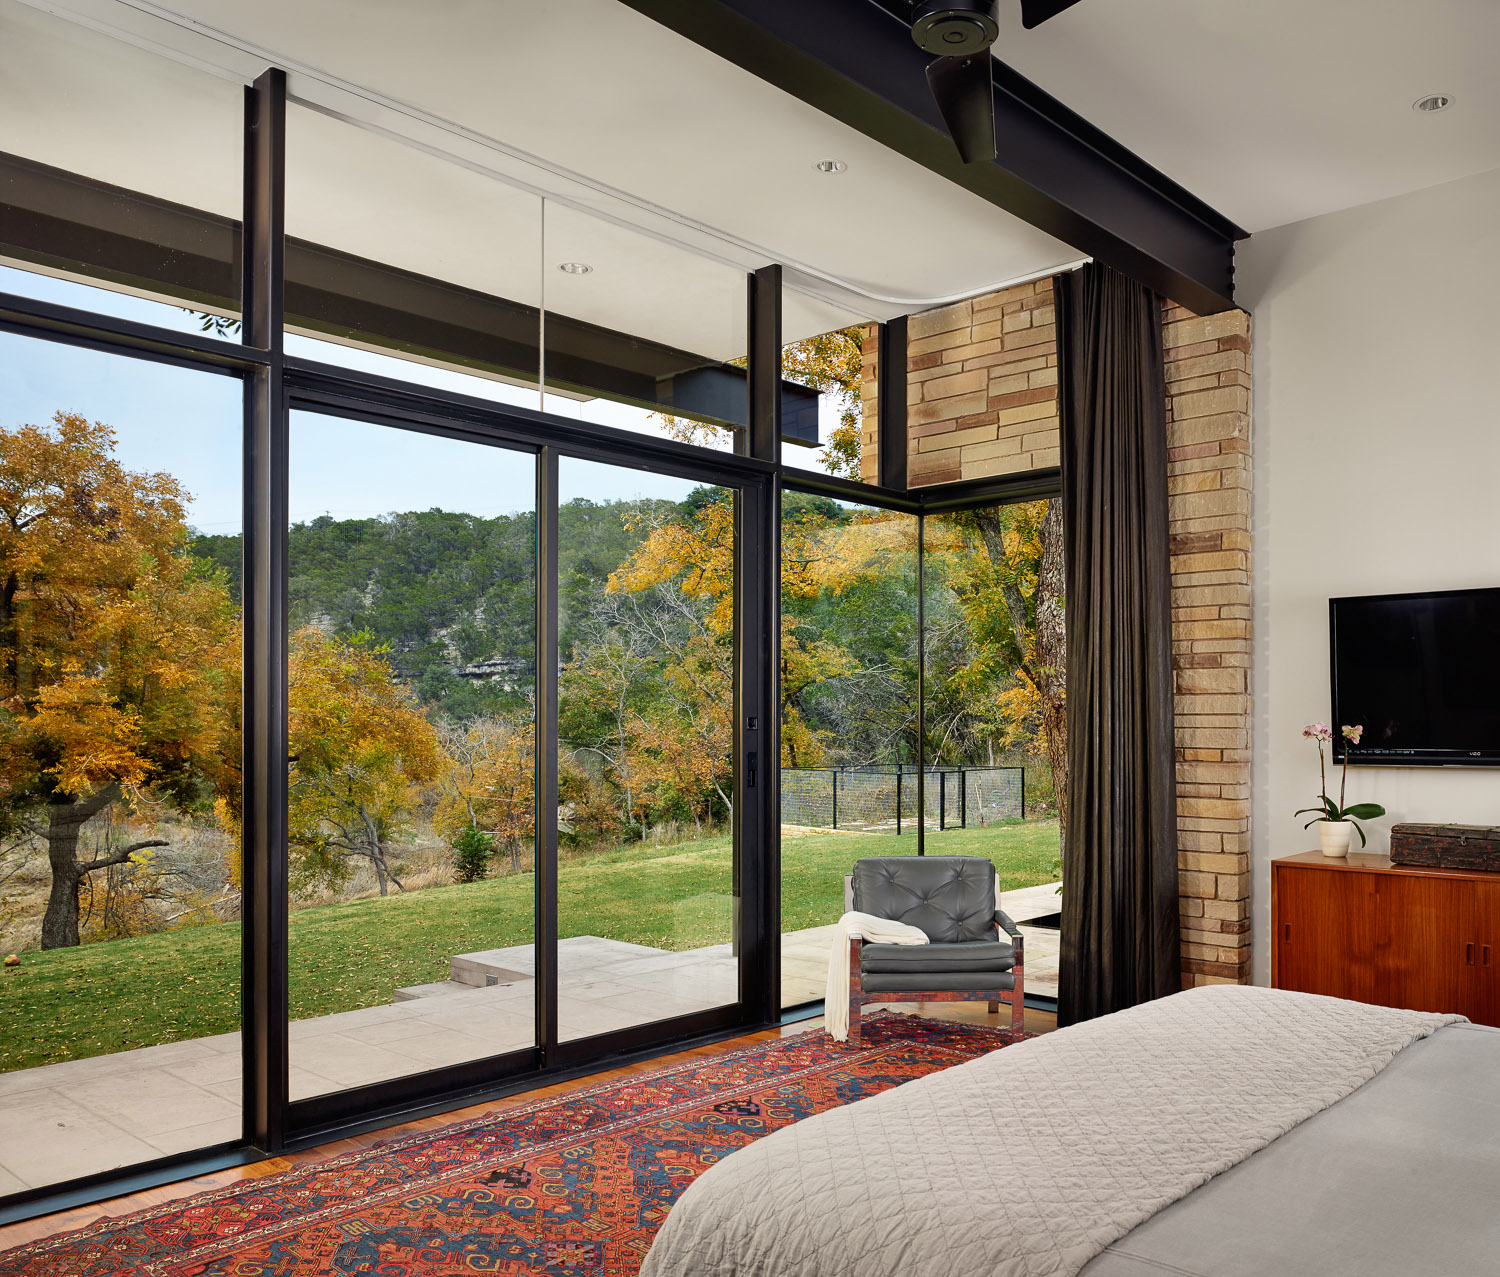 Creekside master bedroom framed in glass and steel.